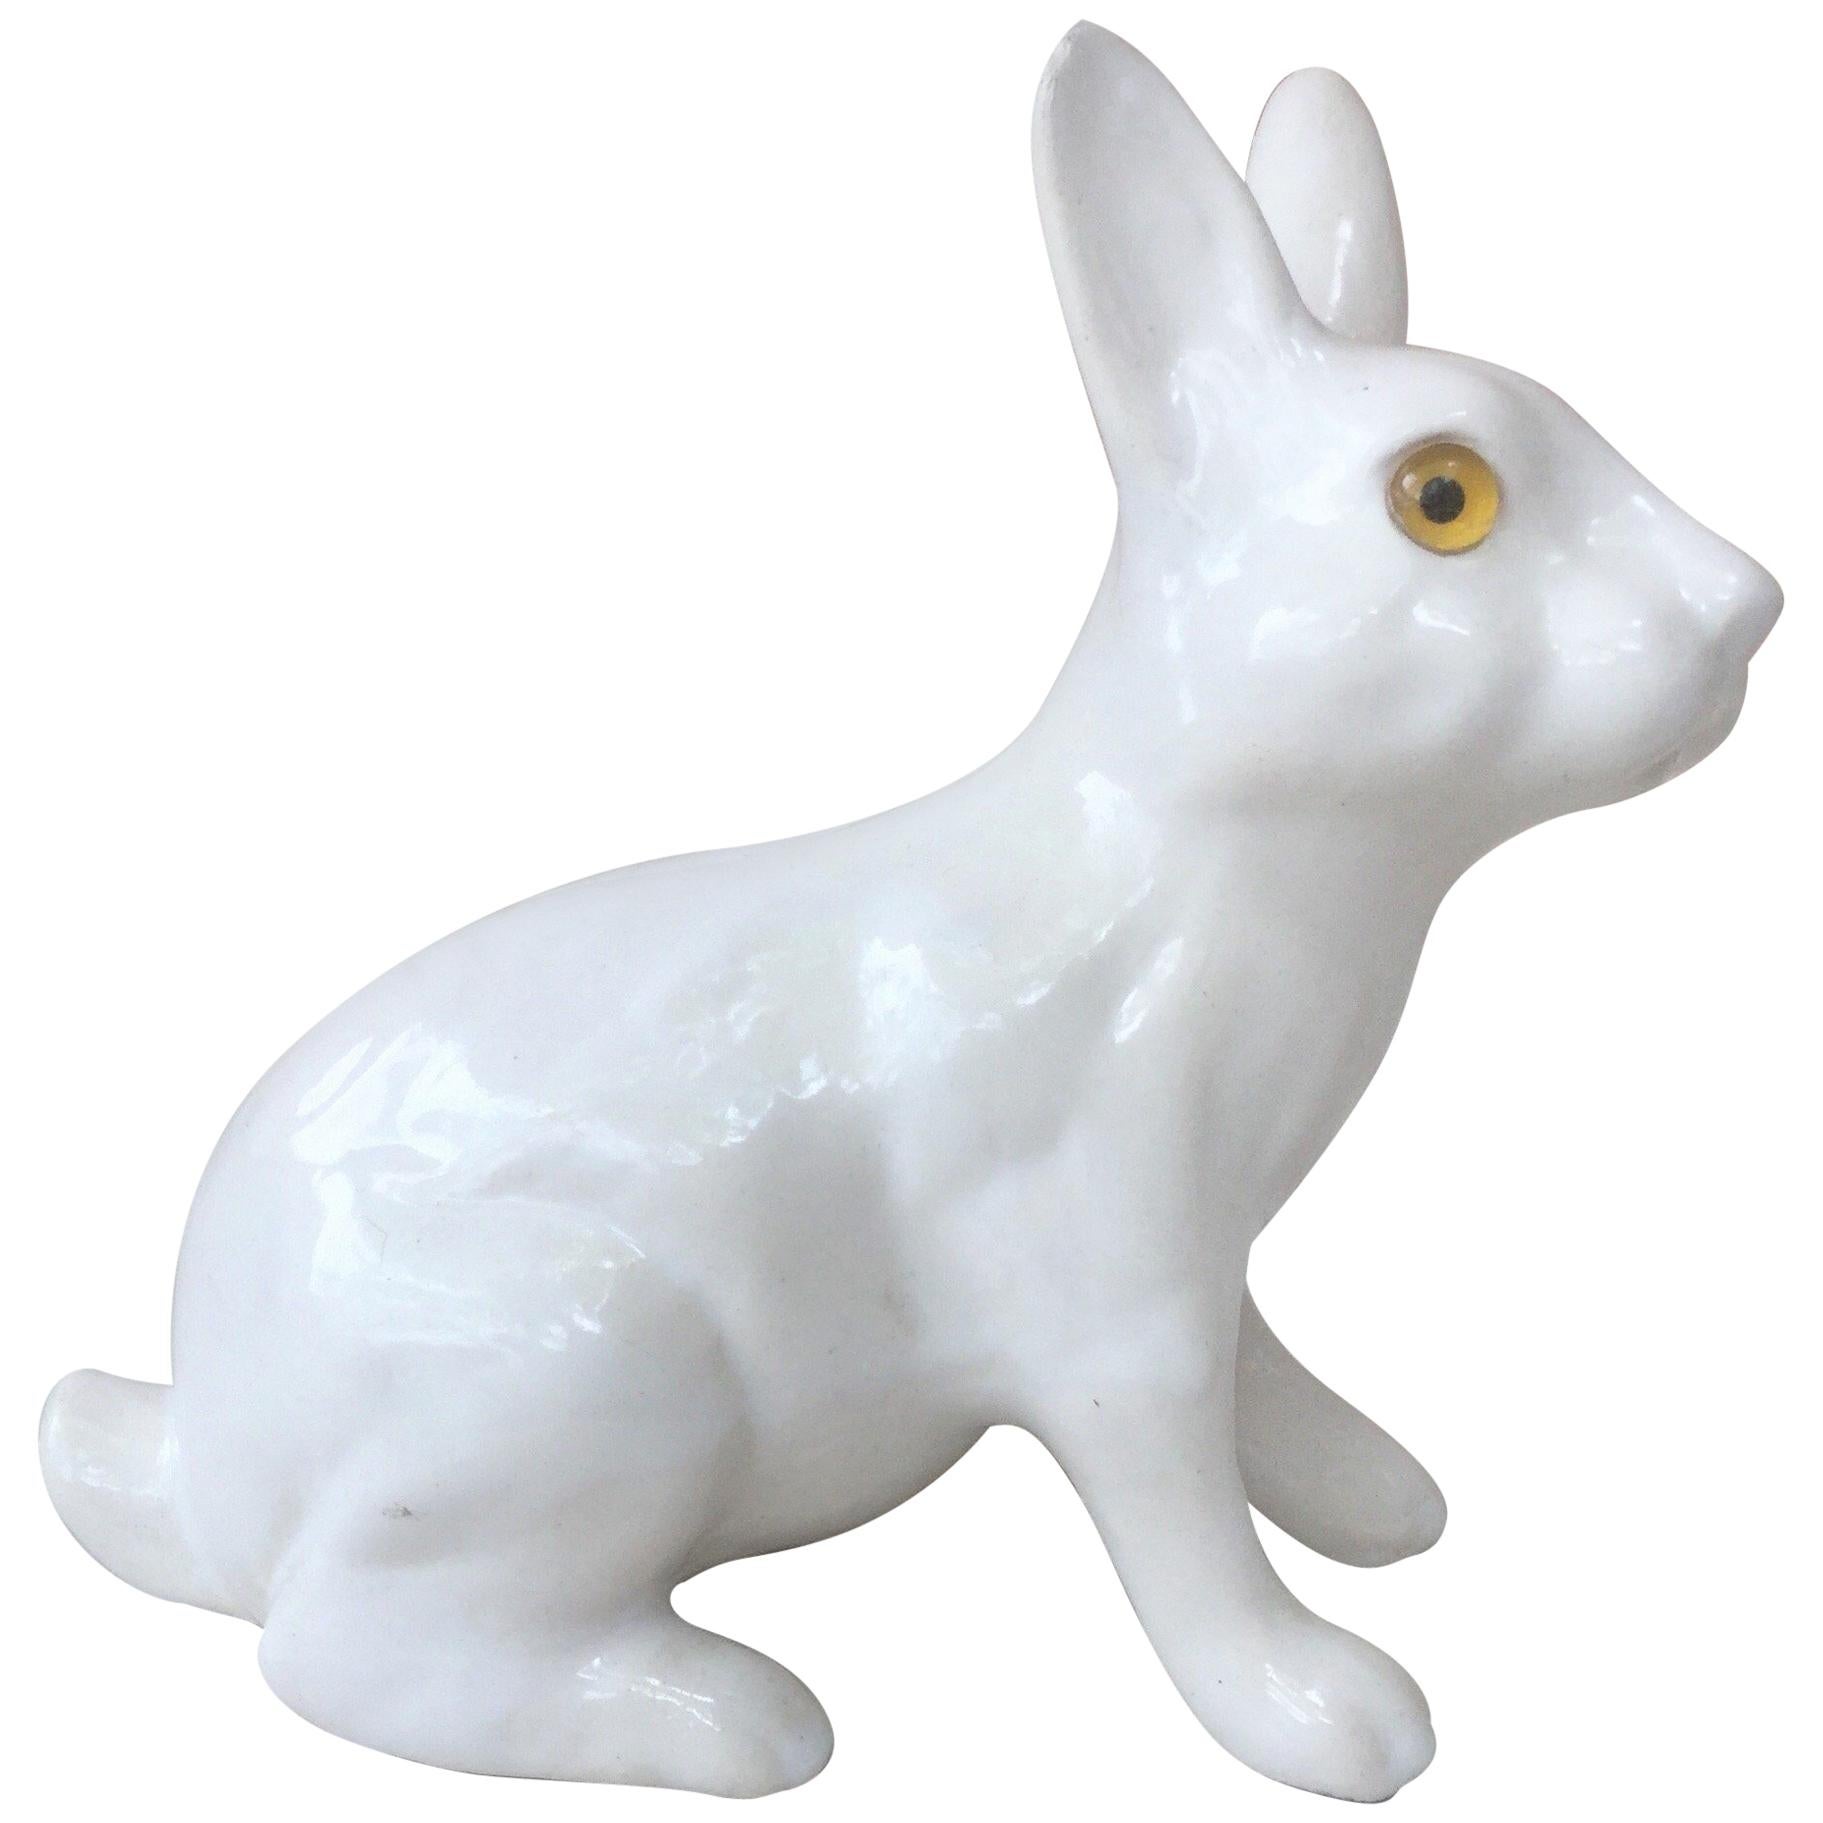 French White Rabbit, circa 1950